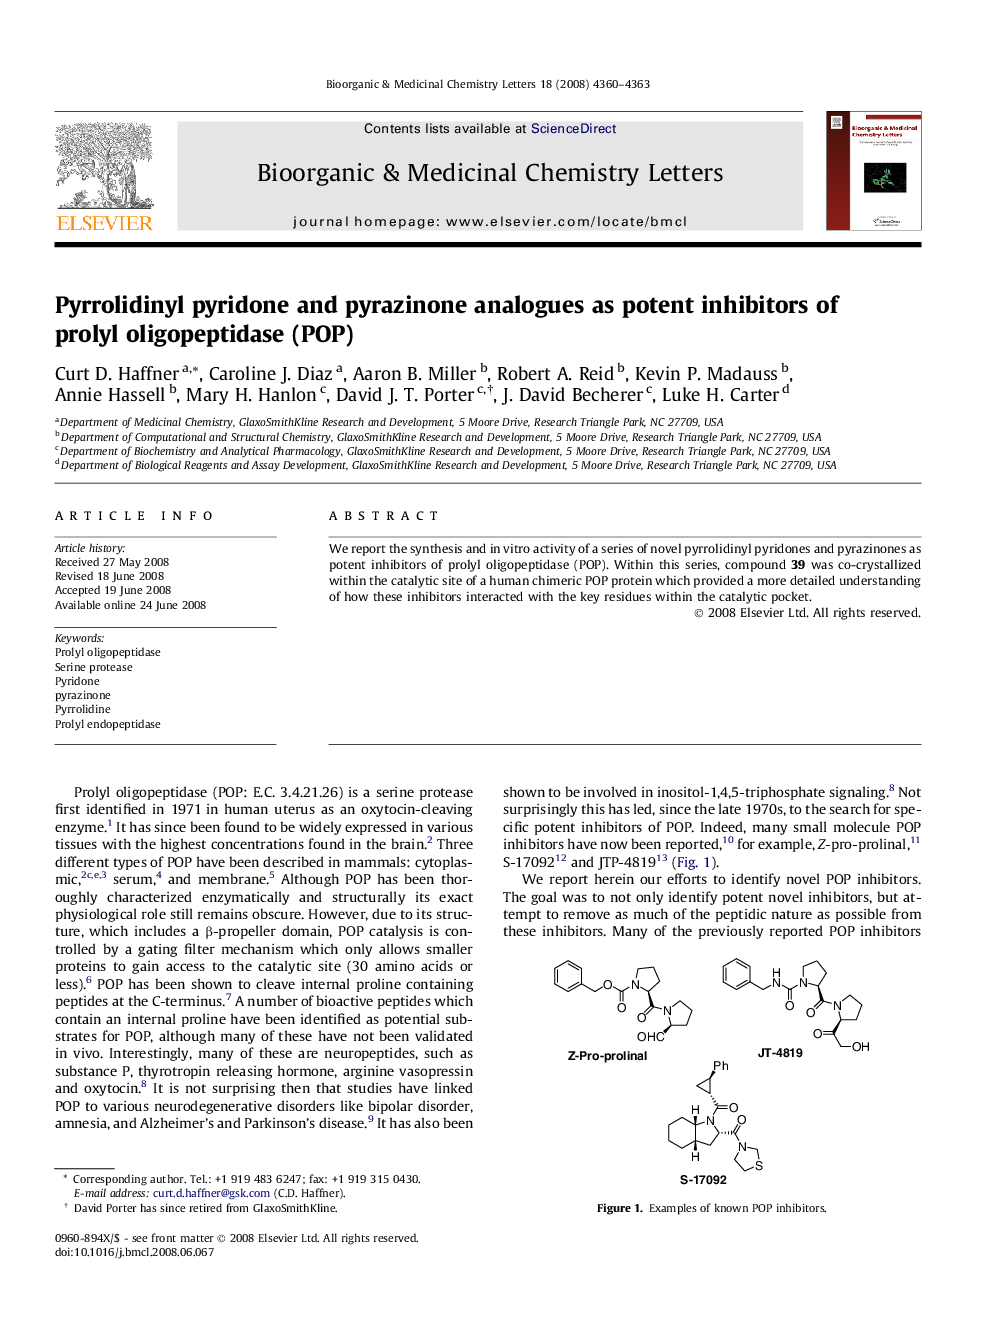 Pyrrolidinyl pyridone and pyrazinone analogues as potent inhibitors of prolyl oligopeptidase (POP)